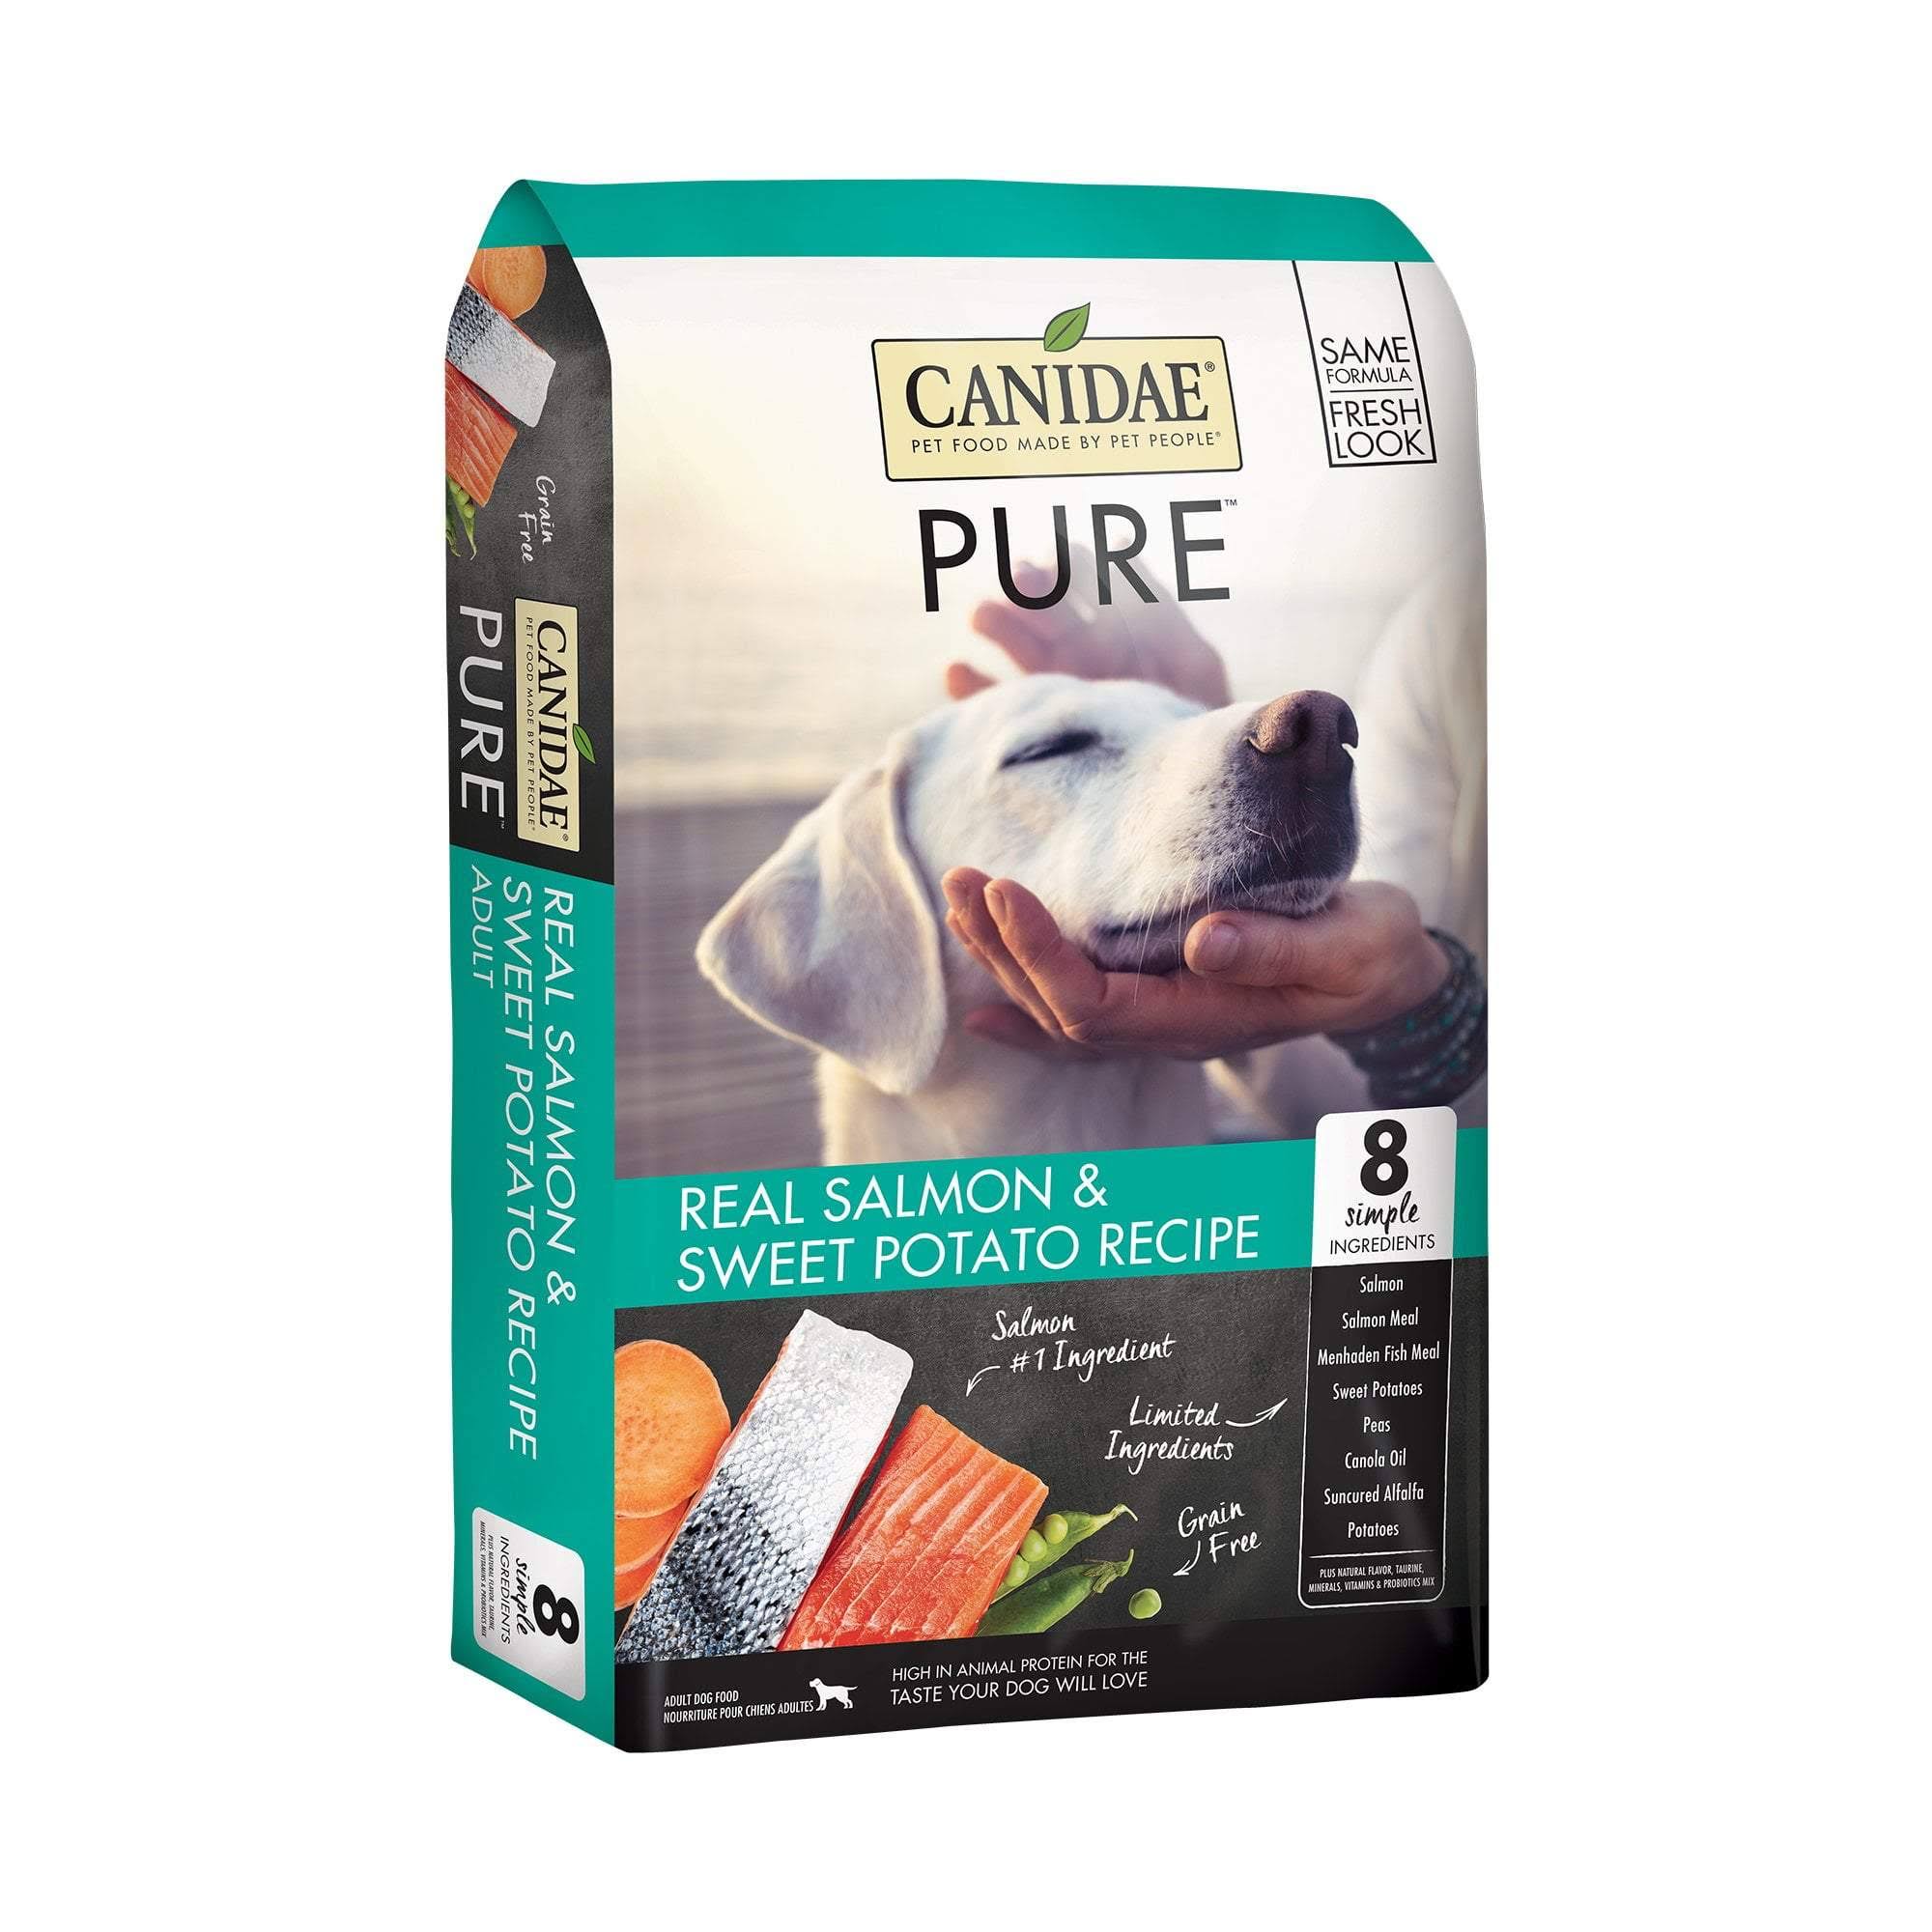 Canidae Pure Sea Dog Food - Salmon